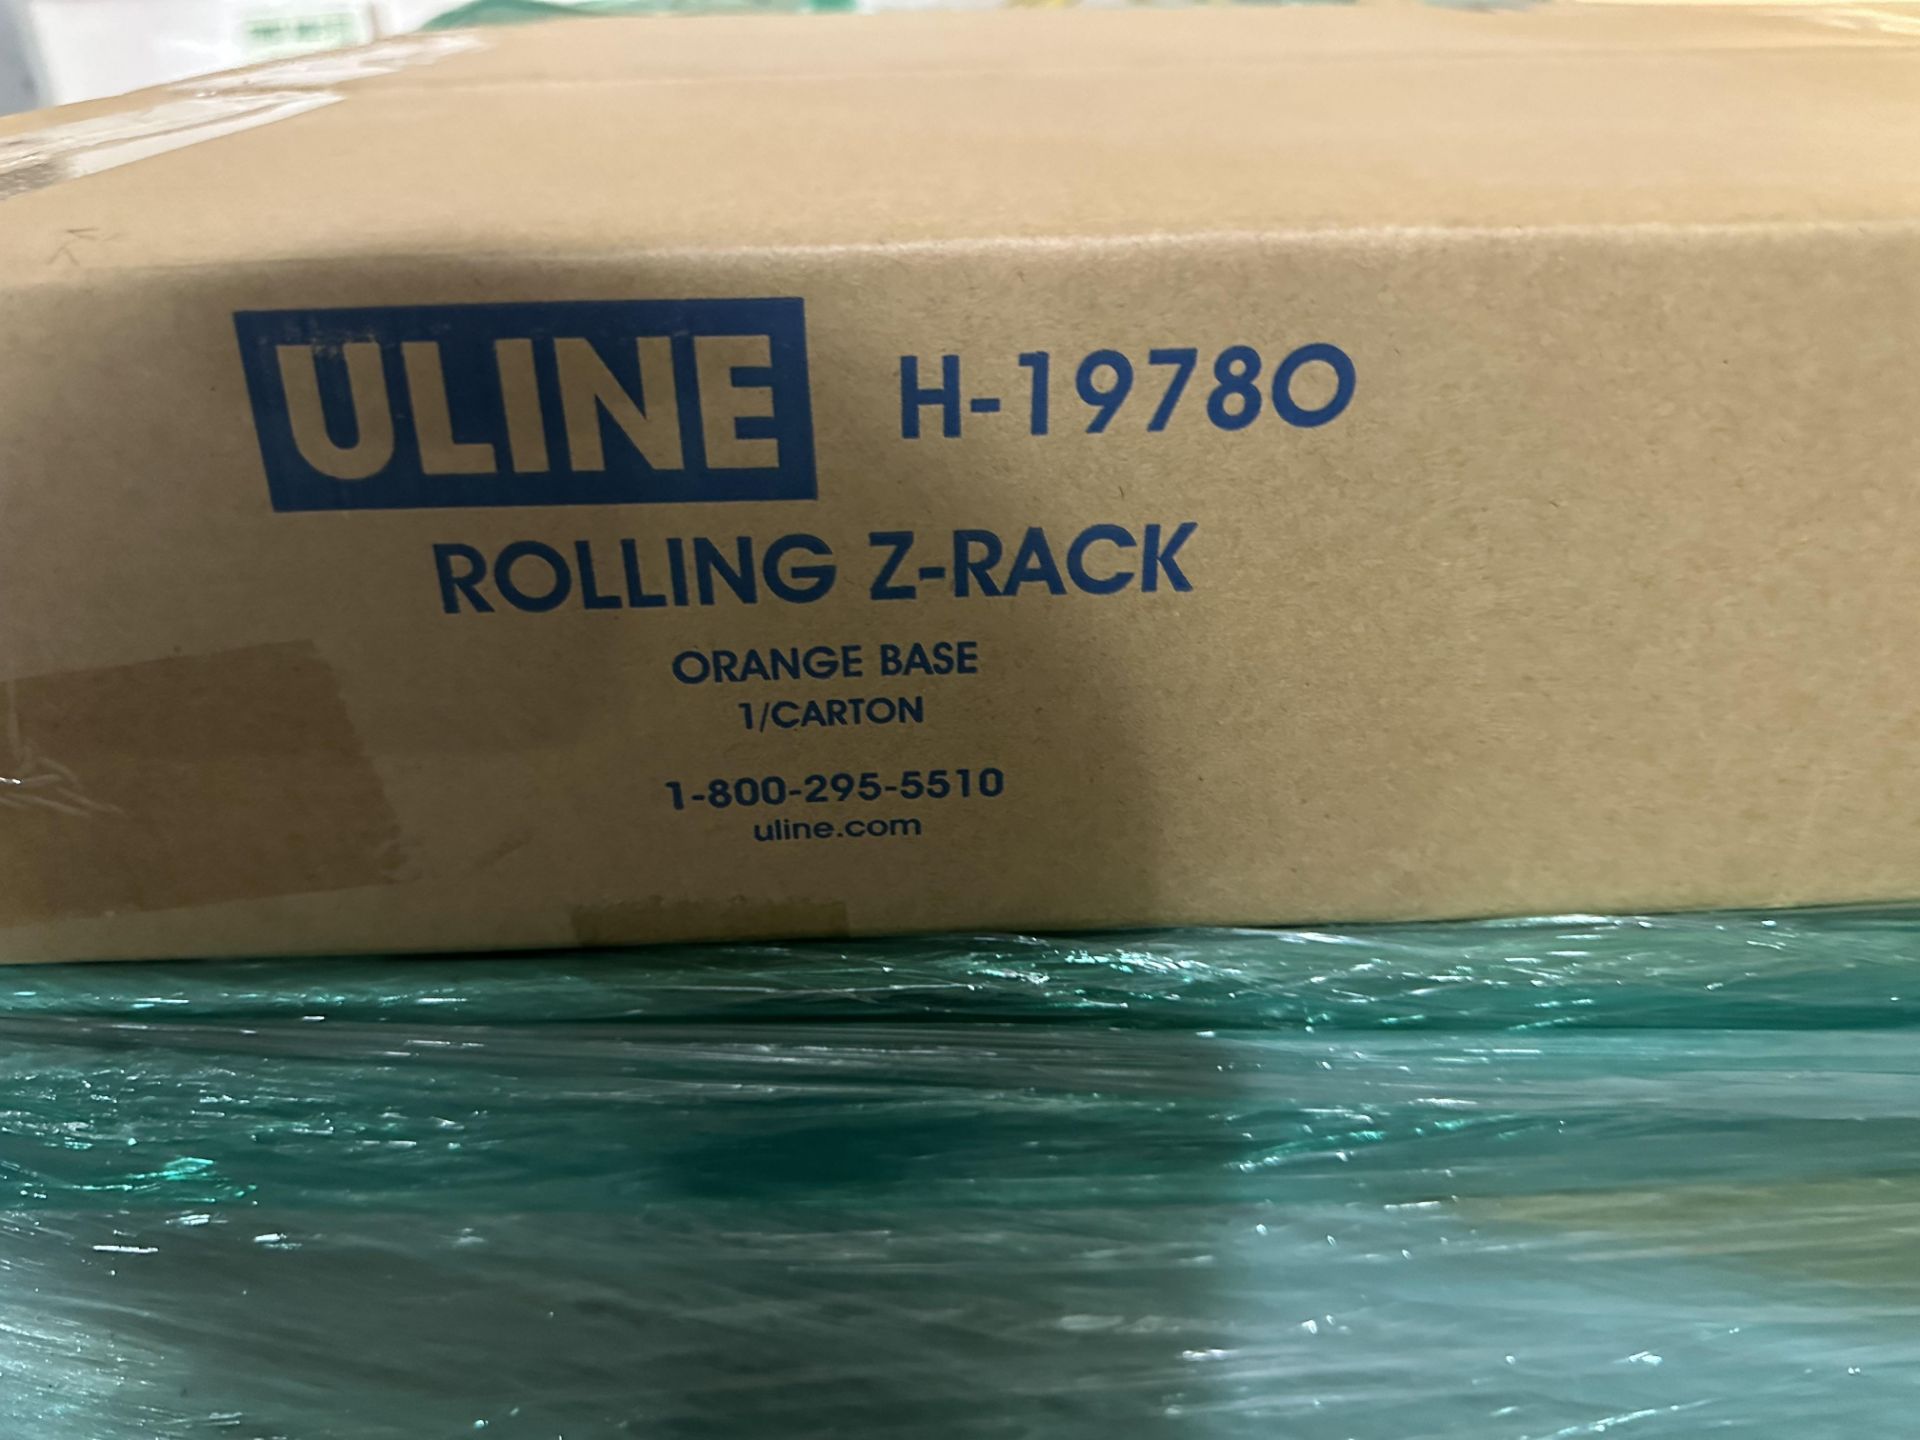 (Located in Quincy, FL) Uline Rolling Z-Racks, Model# H-19780 - Image 2 of 3